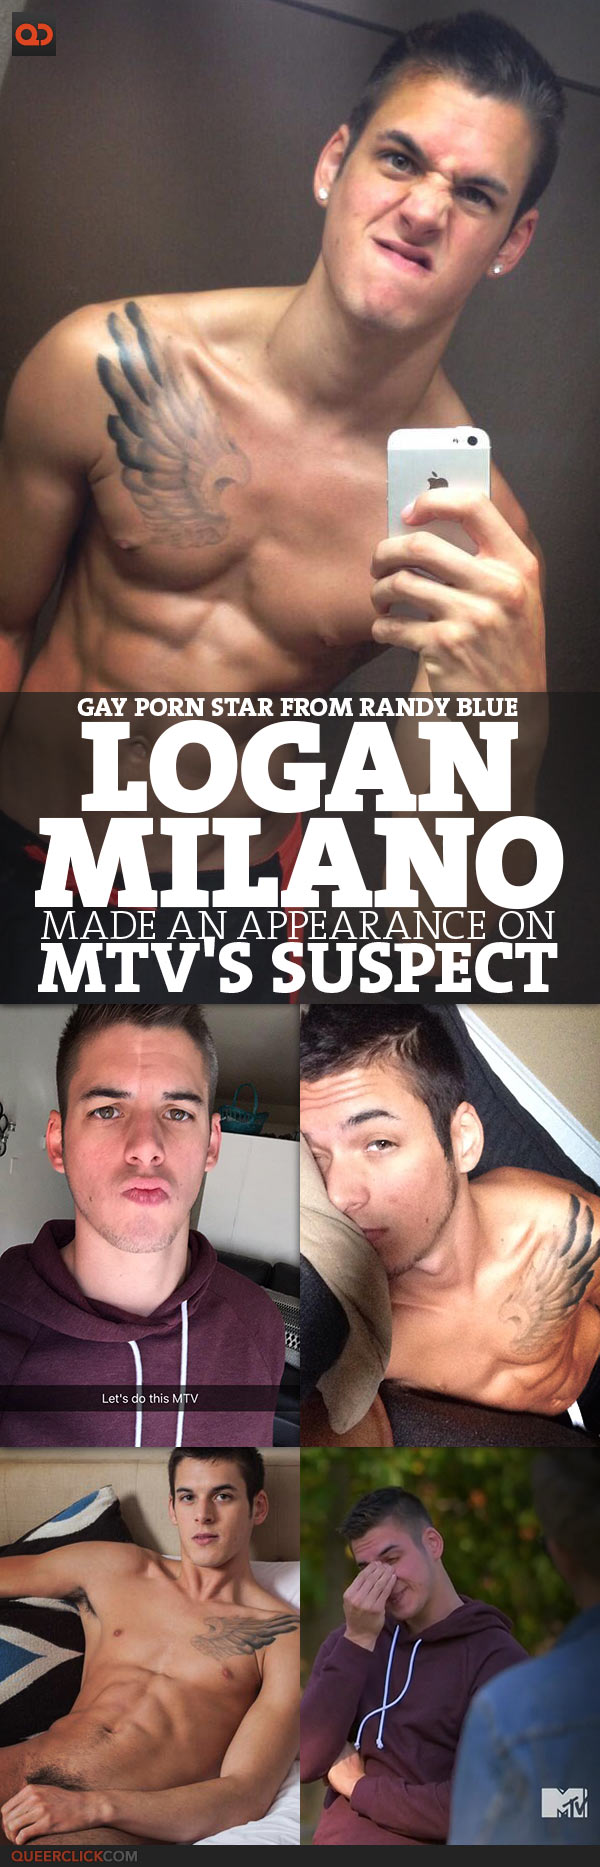 qc-logan_milano_gay_pornstar_randy_blue_appeared_on_mtv_suspect-teaser